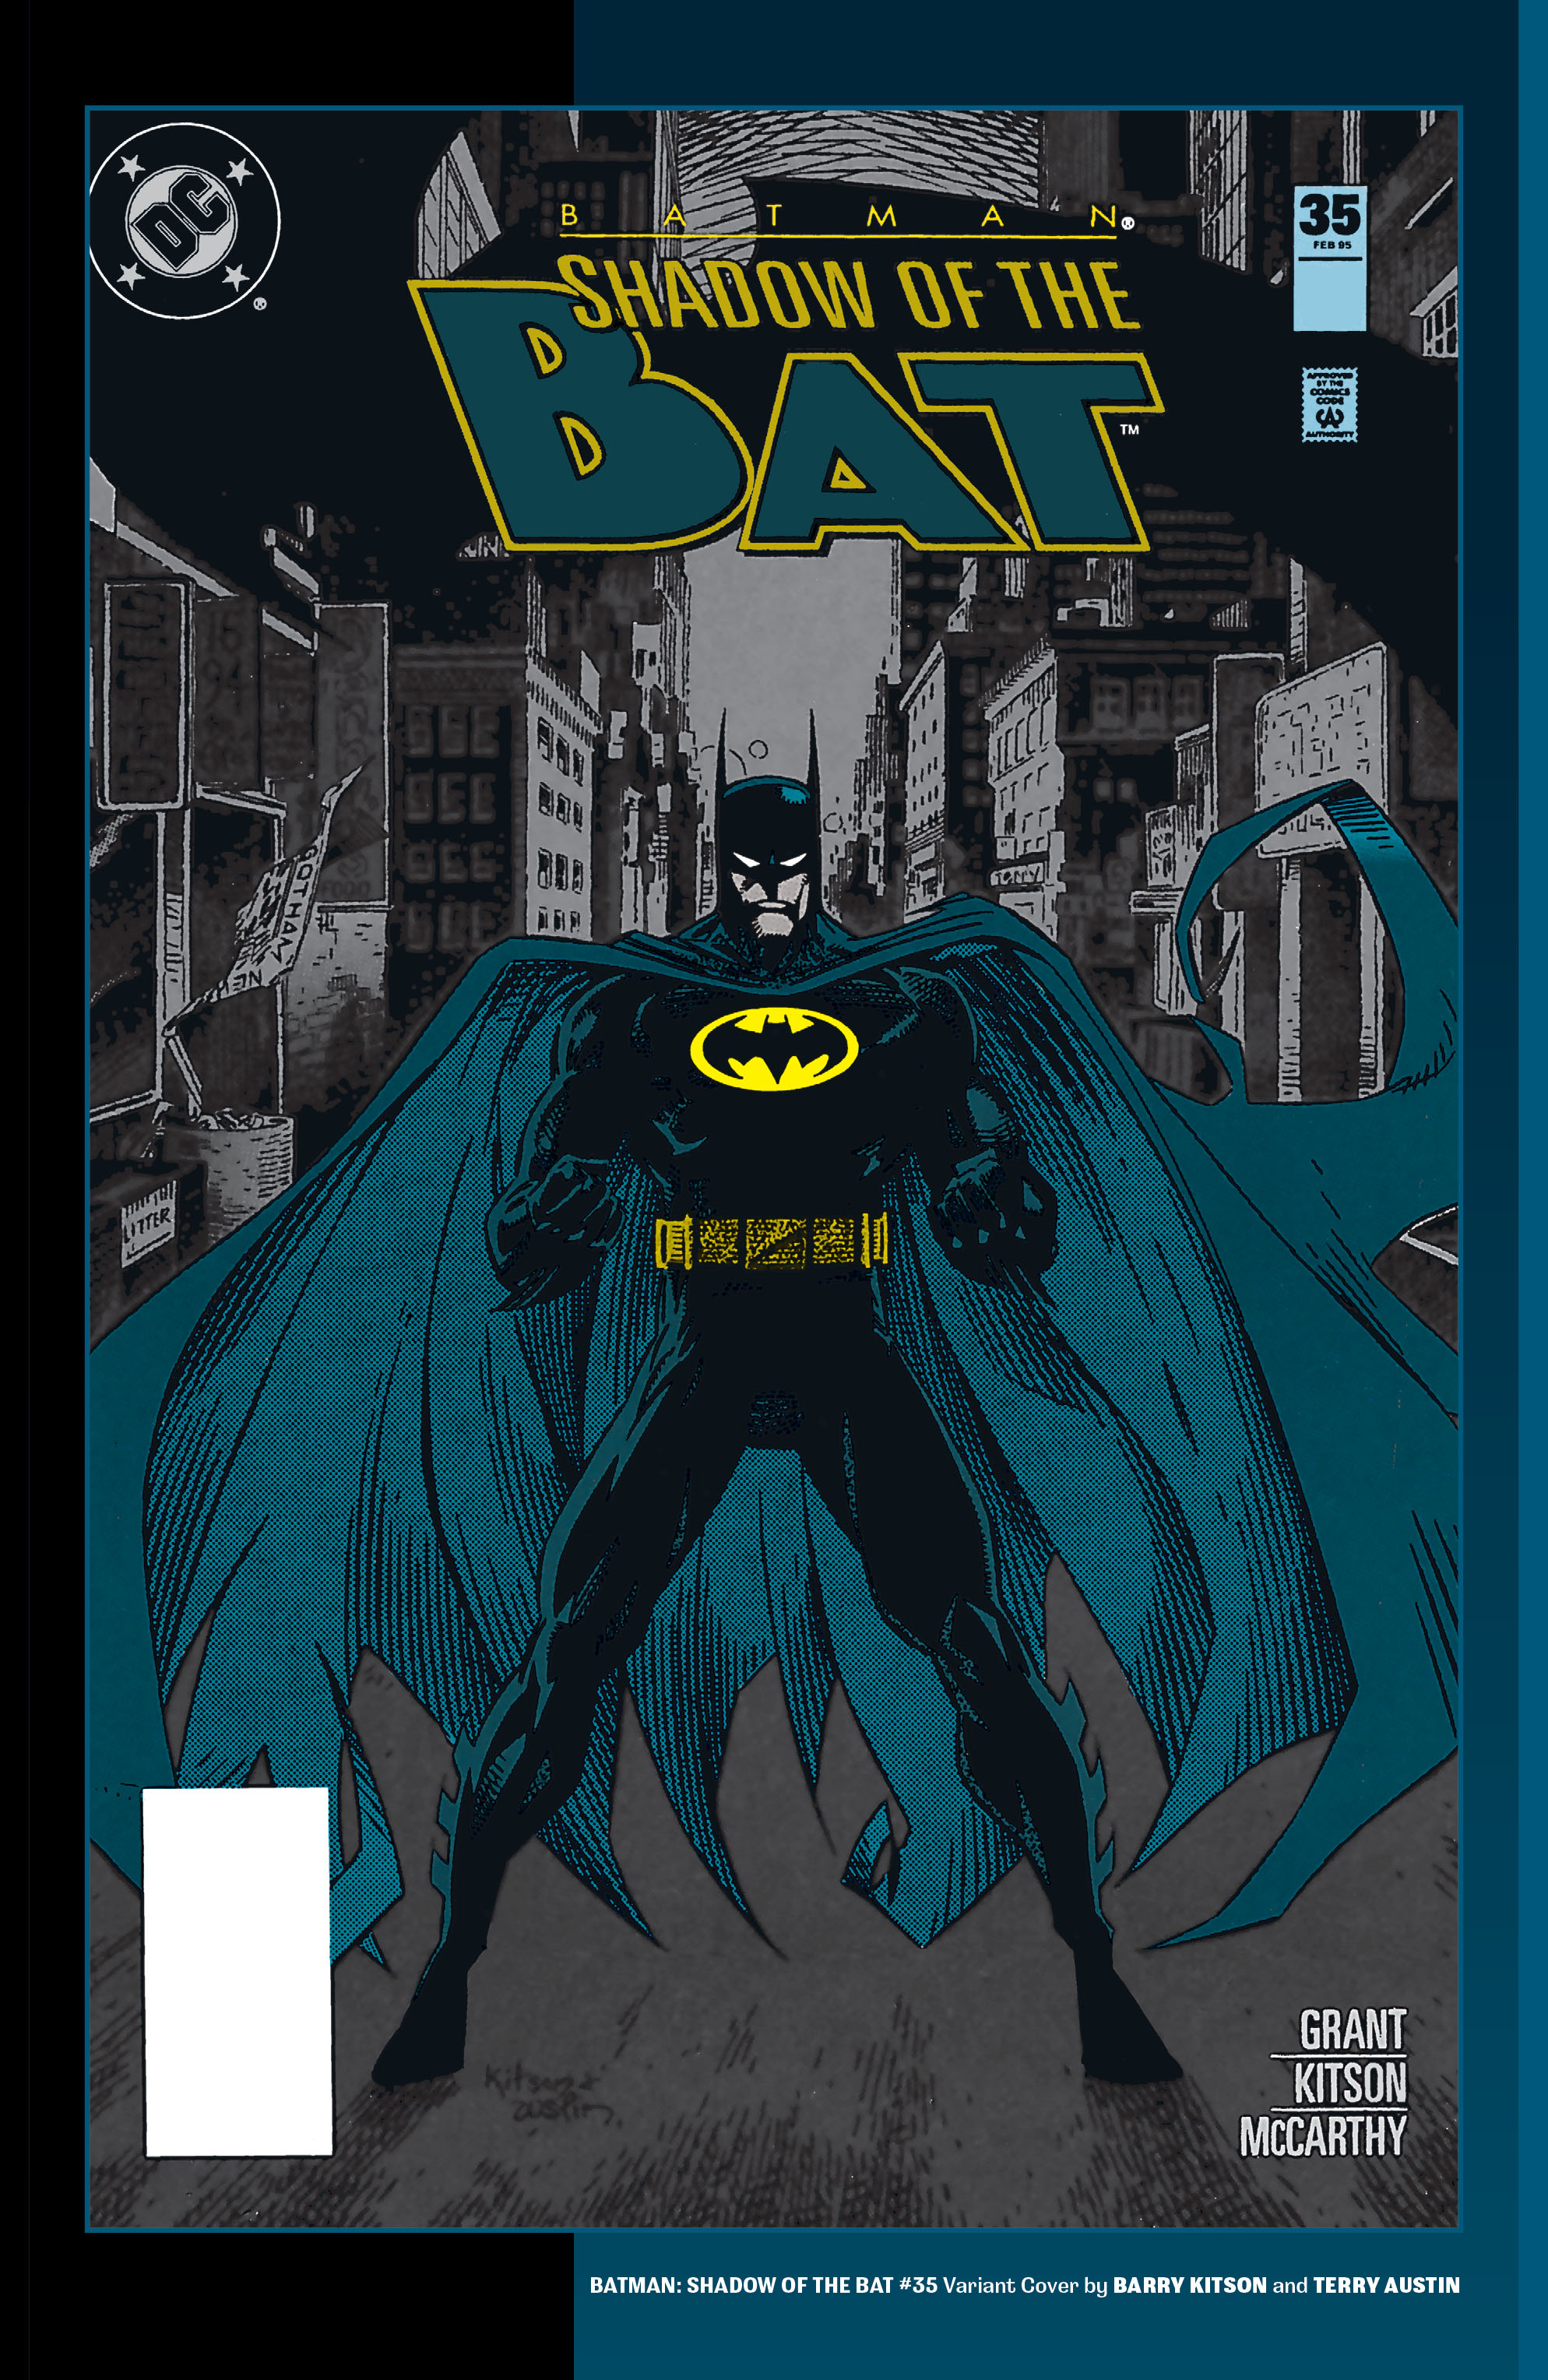 Бэтмен на английском. Batman in English описание героя. Найти Бэтмен 1992 комикс футболки. Имя Бэтмена на английском.